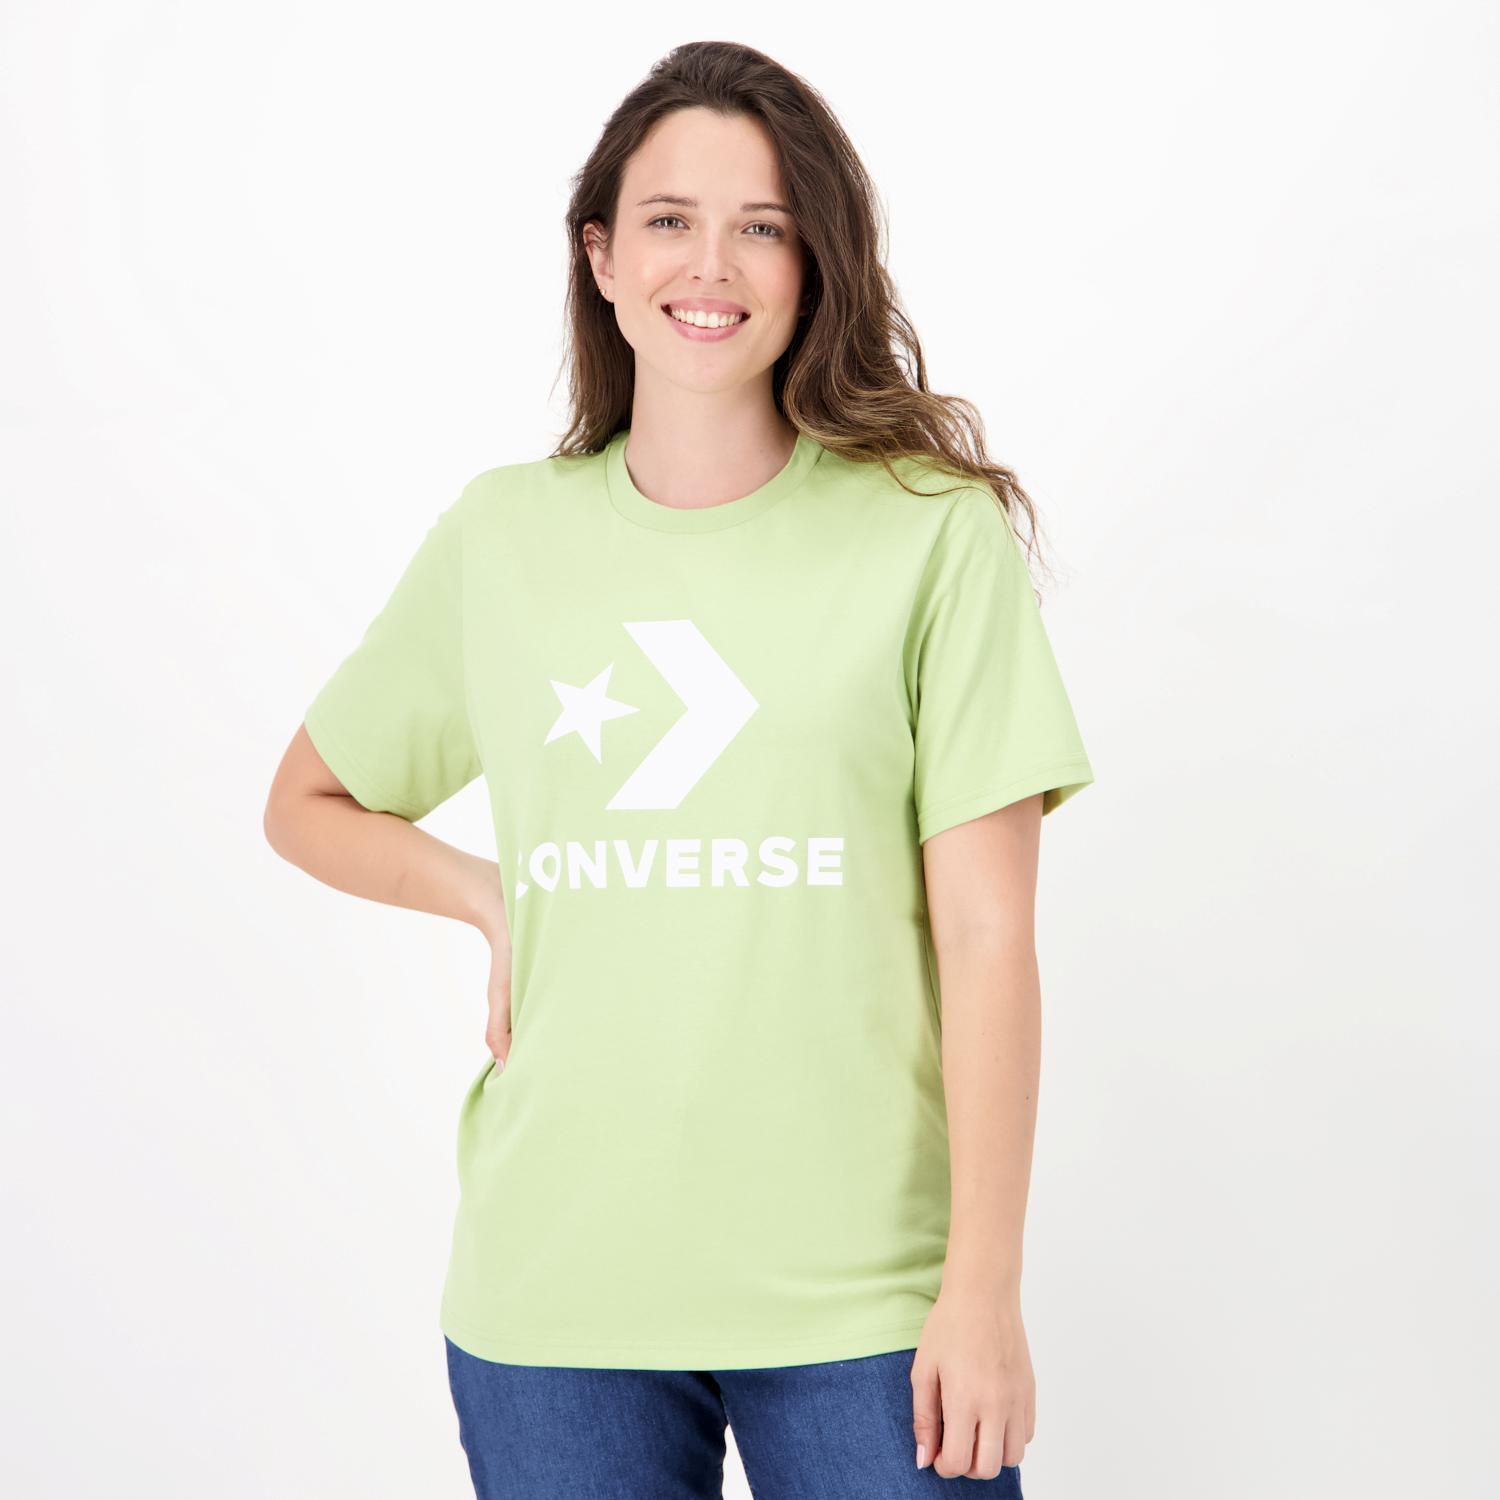 Converse Star Chevron Groen T-shirt Dames